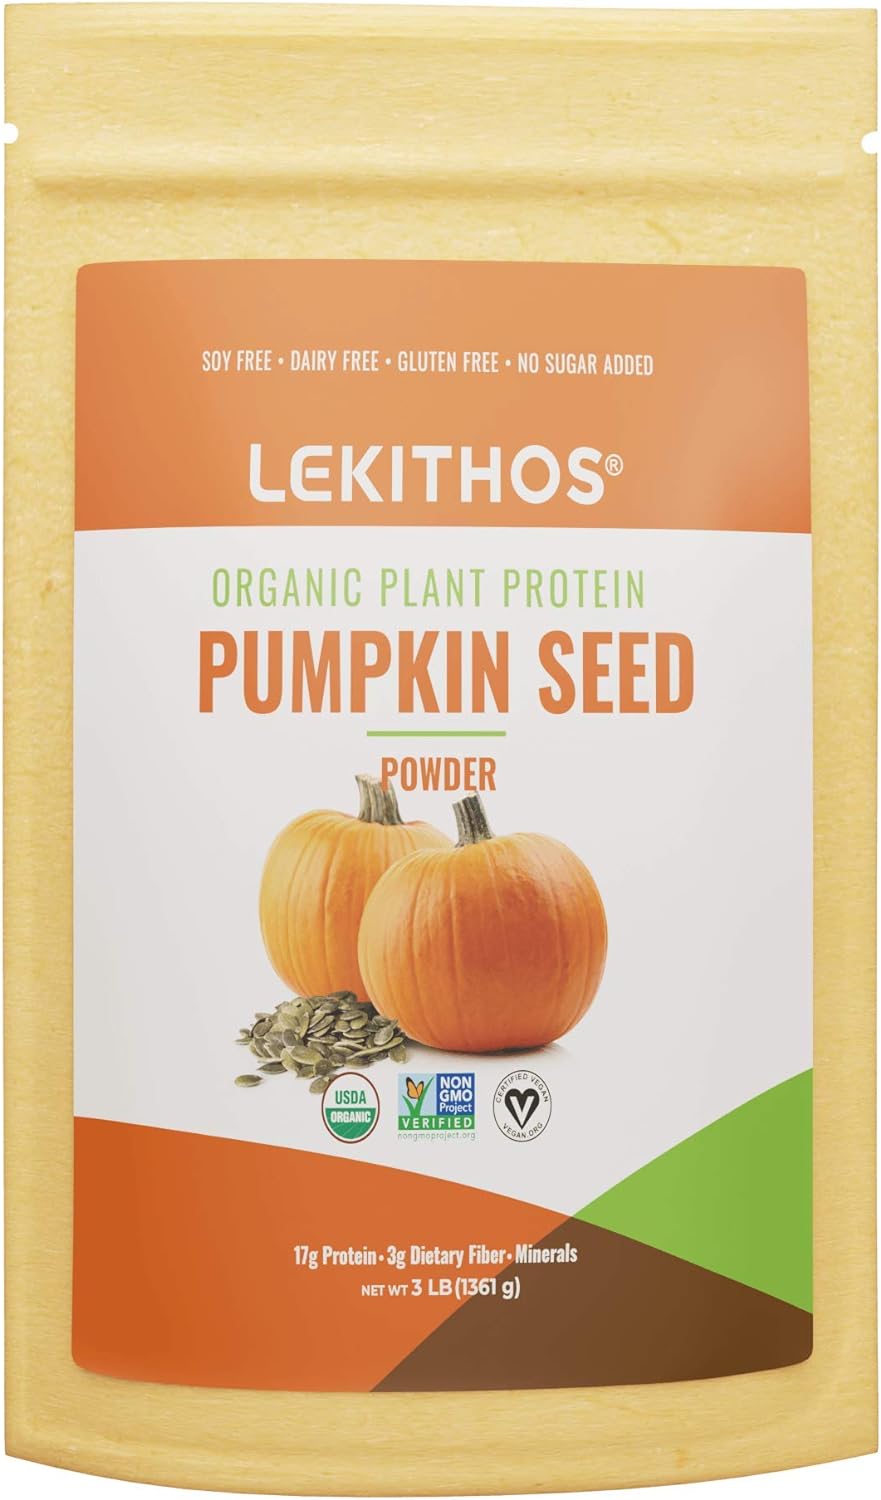 Lekithos Organic Pumpkin Seed Protein - 3 lb - 17g Protein - Certified